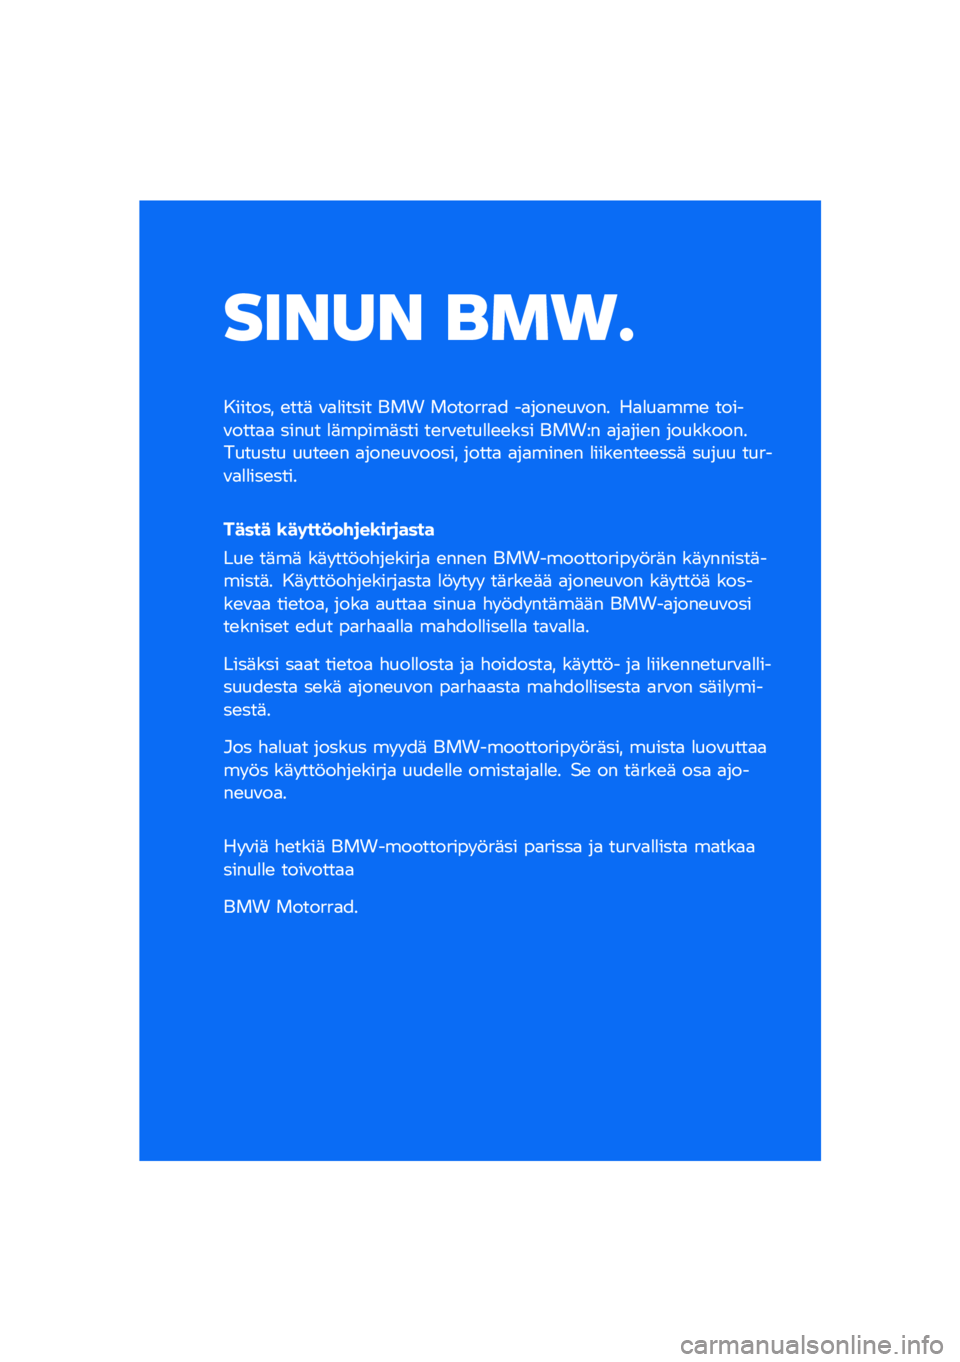 BMW MOTORRAD F 850 GS 2021  Käsikirja (in Finnish) ����� ���\b�	
������� �\b���	 �\f�
�
����� ��� �������
� ��
����\b��\f��� ��
�
��
���\b �����\f����
�
 ����� �
�	�����	��� ��\b��\f�\b�